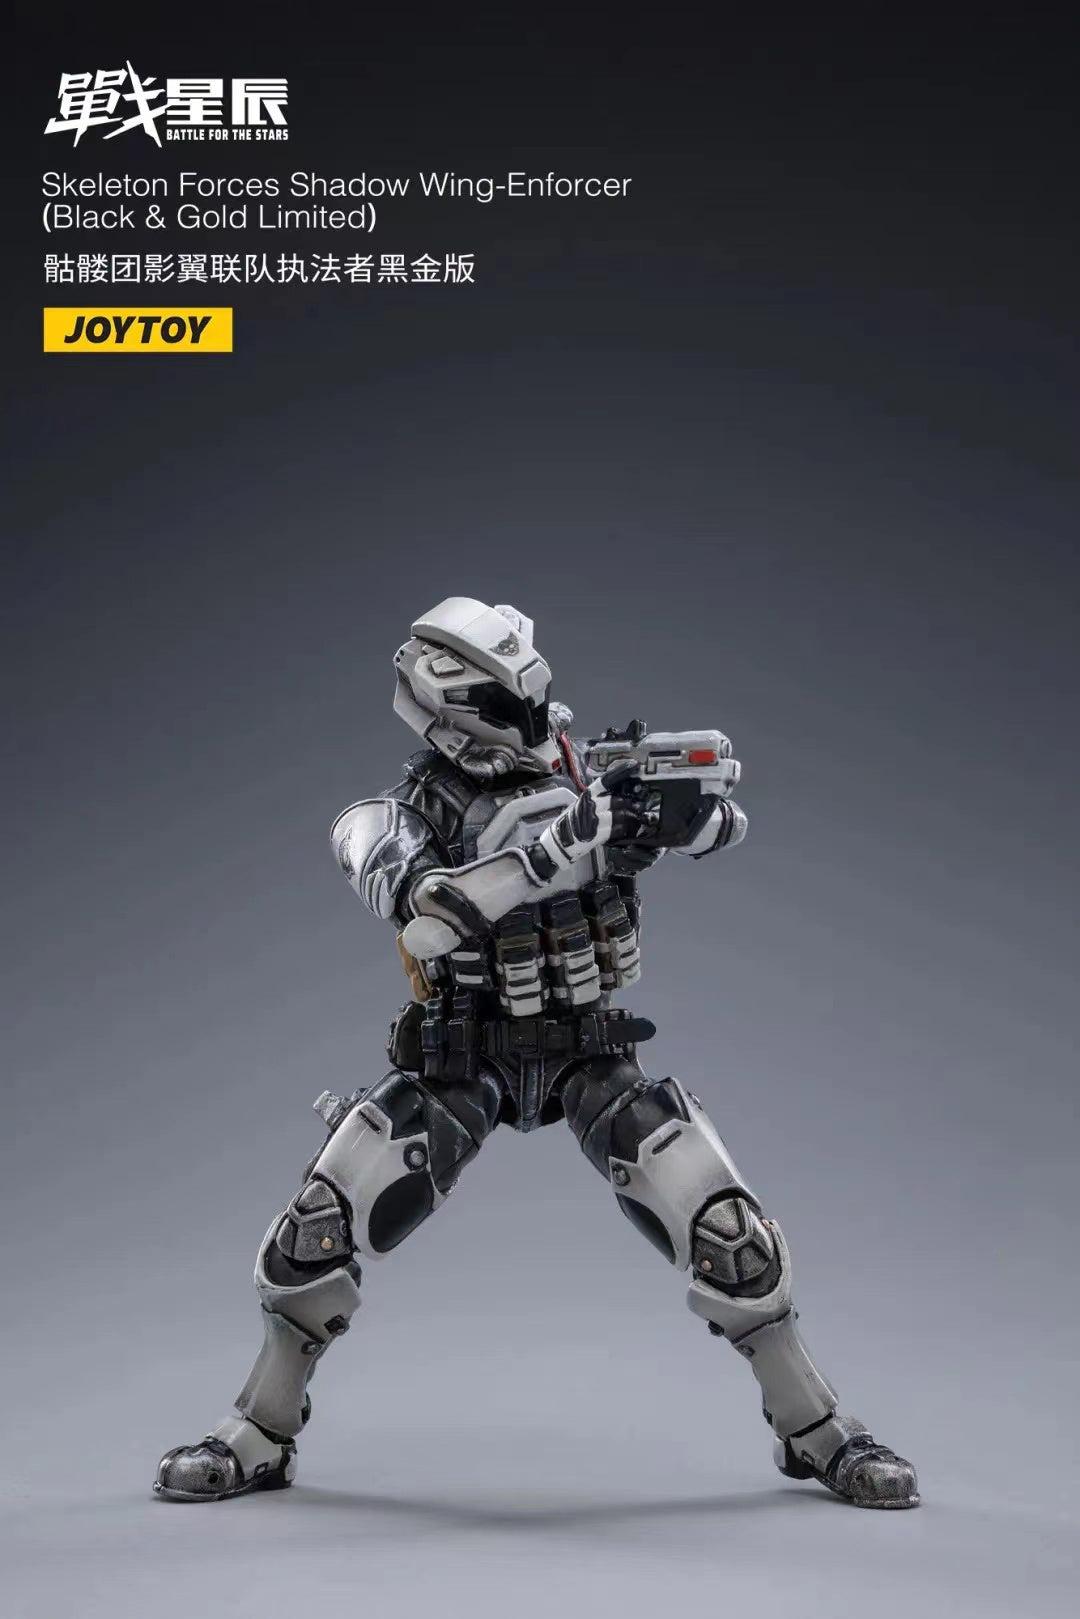 JOYTOY 1/18 Action Figure Skeleton Forces Shadow Wing Enforcer 